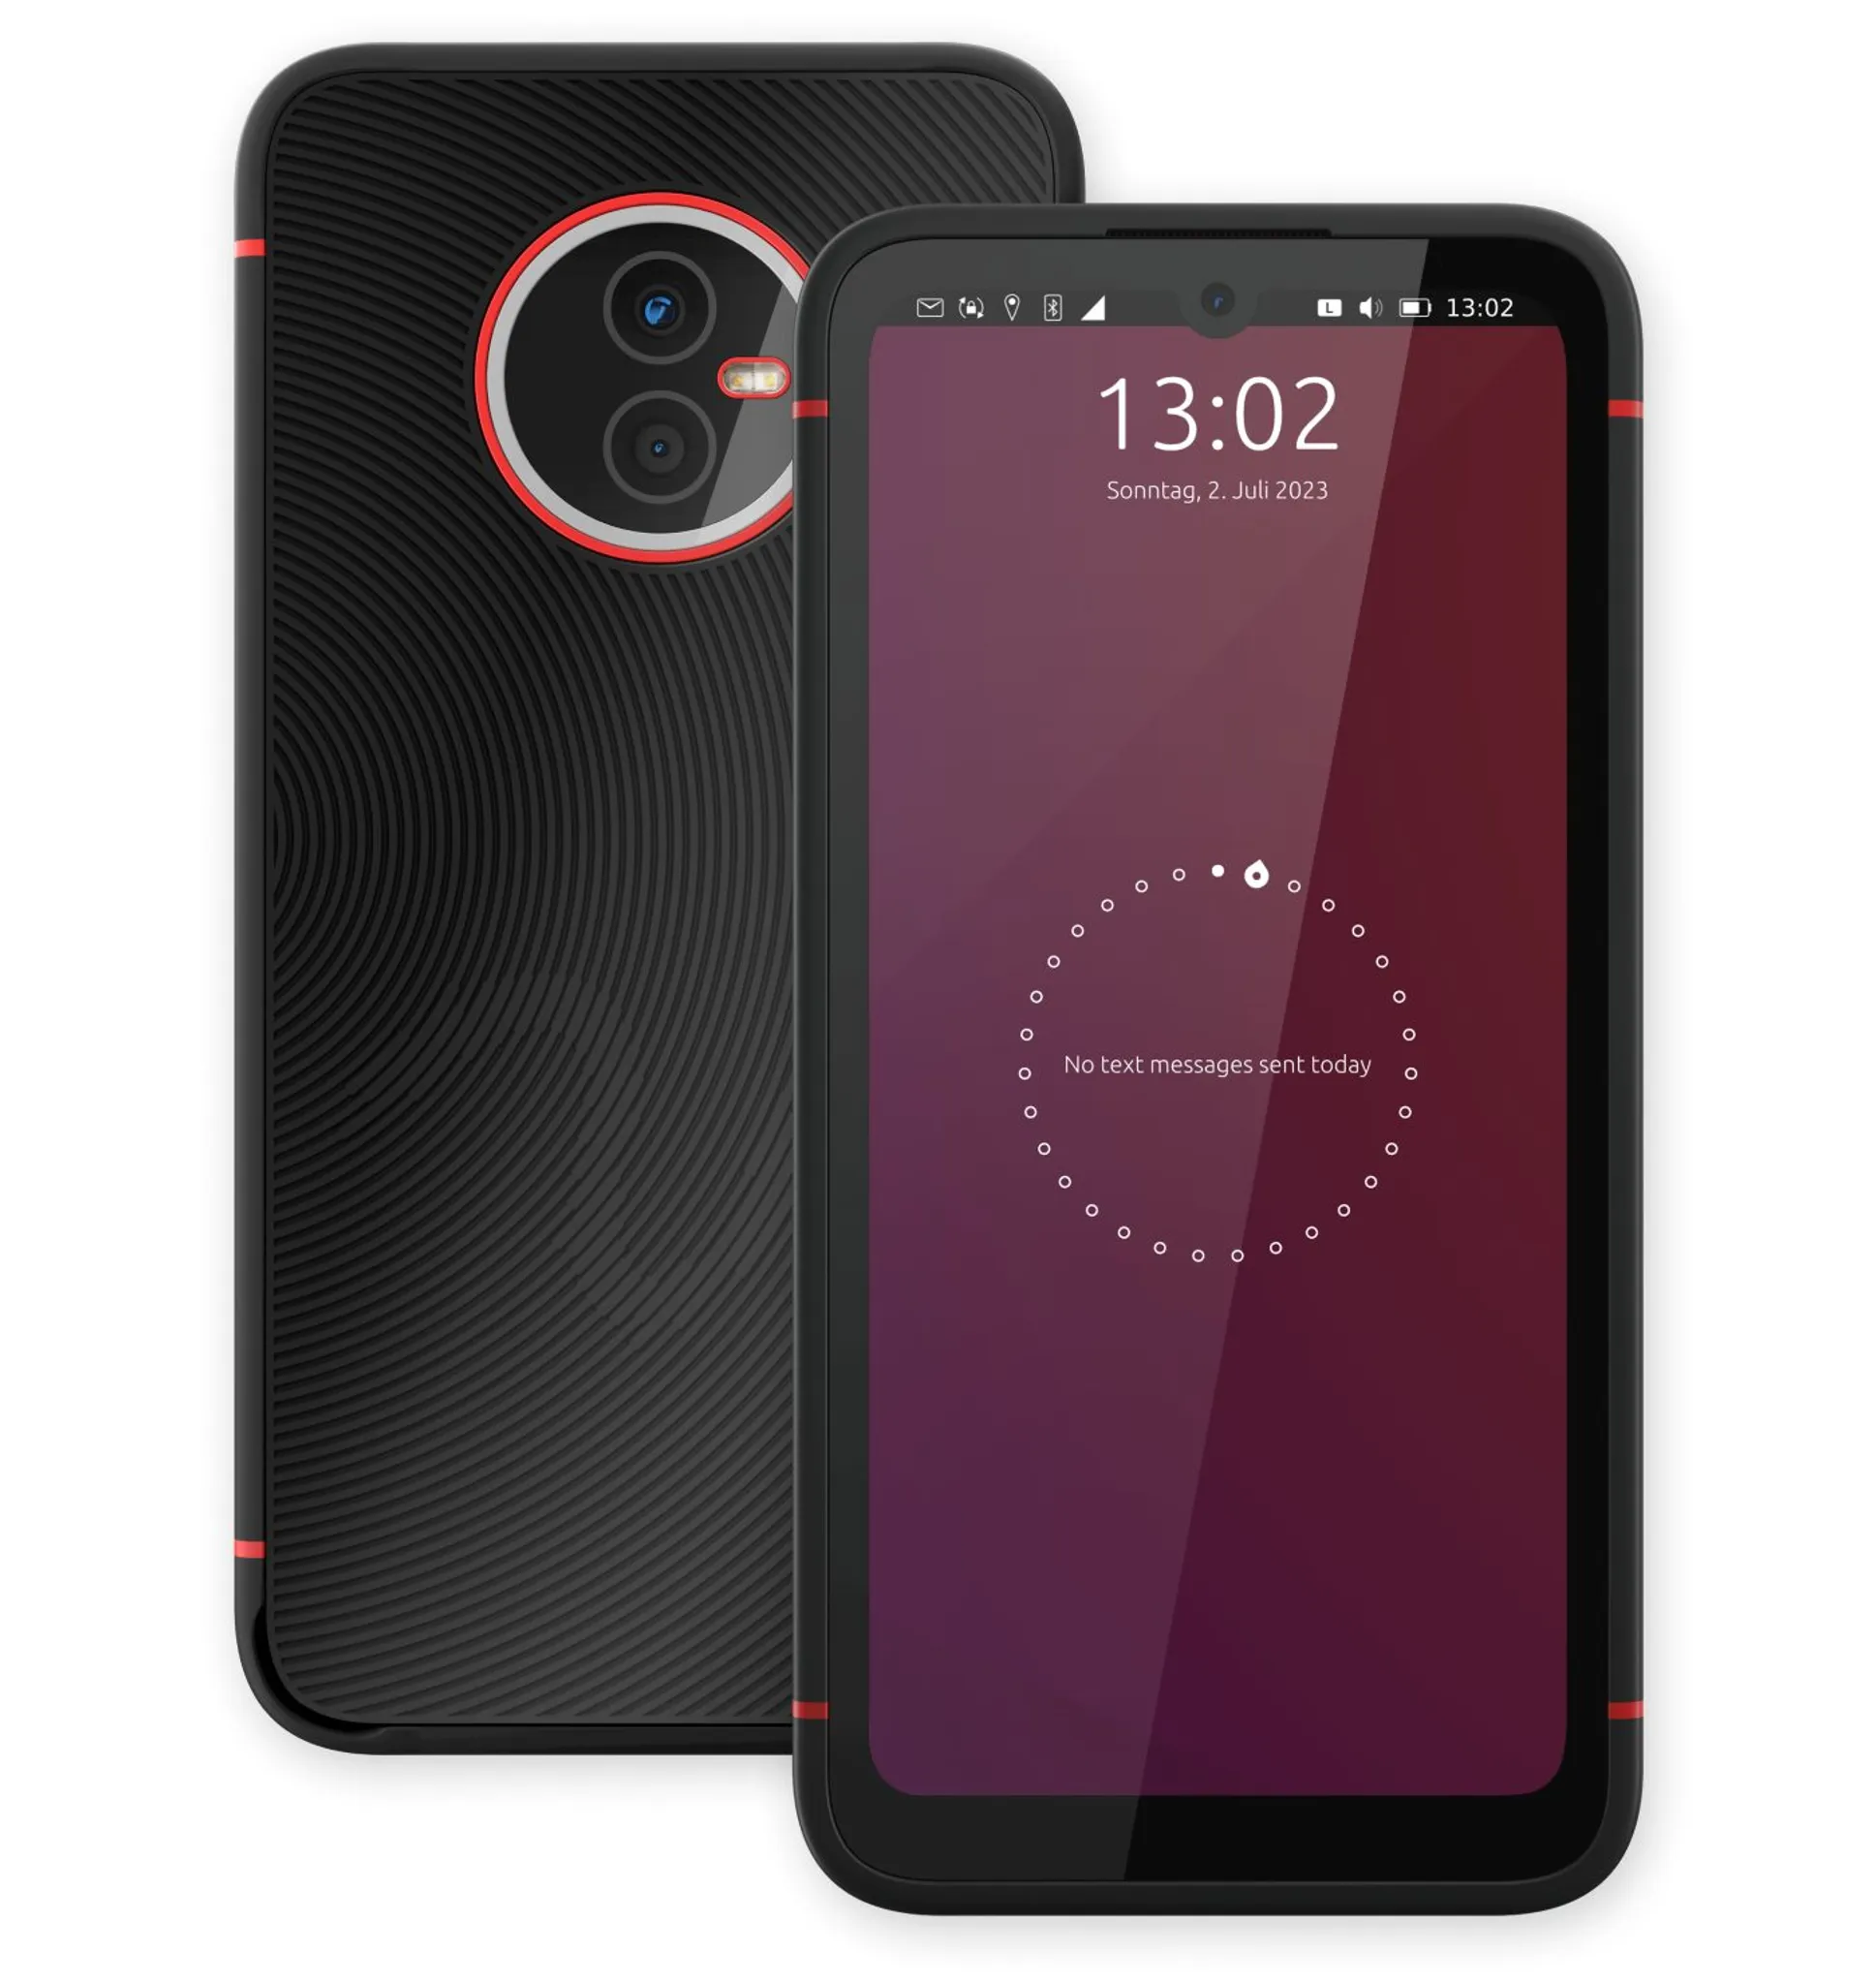 Volla Touch Phone Ubuntu Smartphone – X23 mit